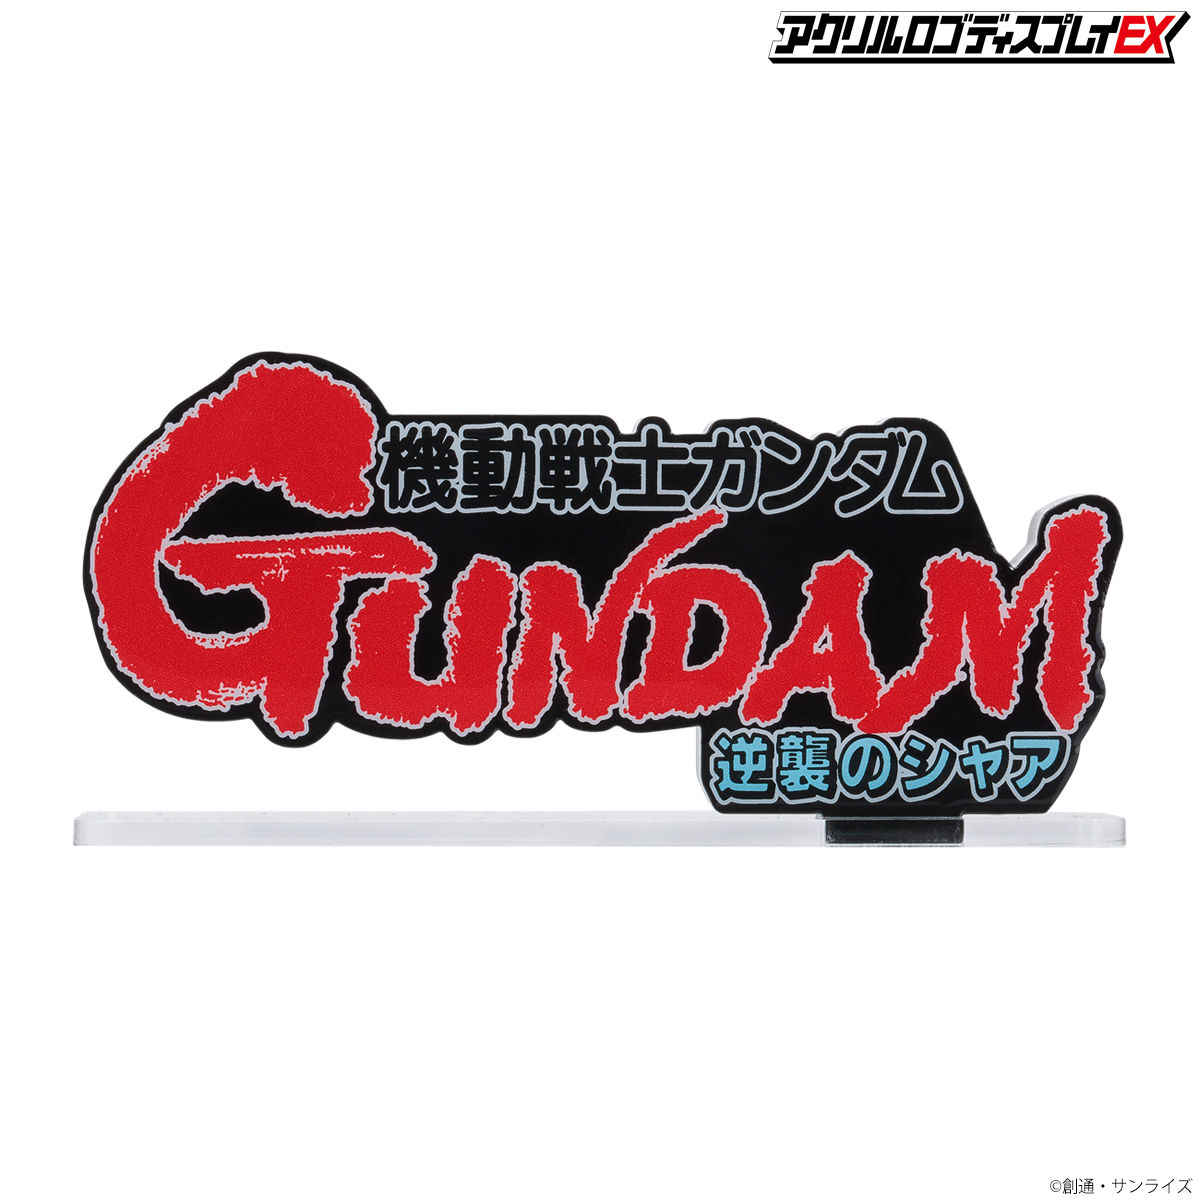 Acrylic Logo Diplay EX-Mobile Suit Gundam : Char's Counterattack